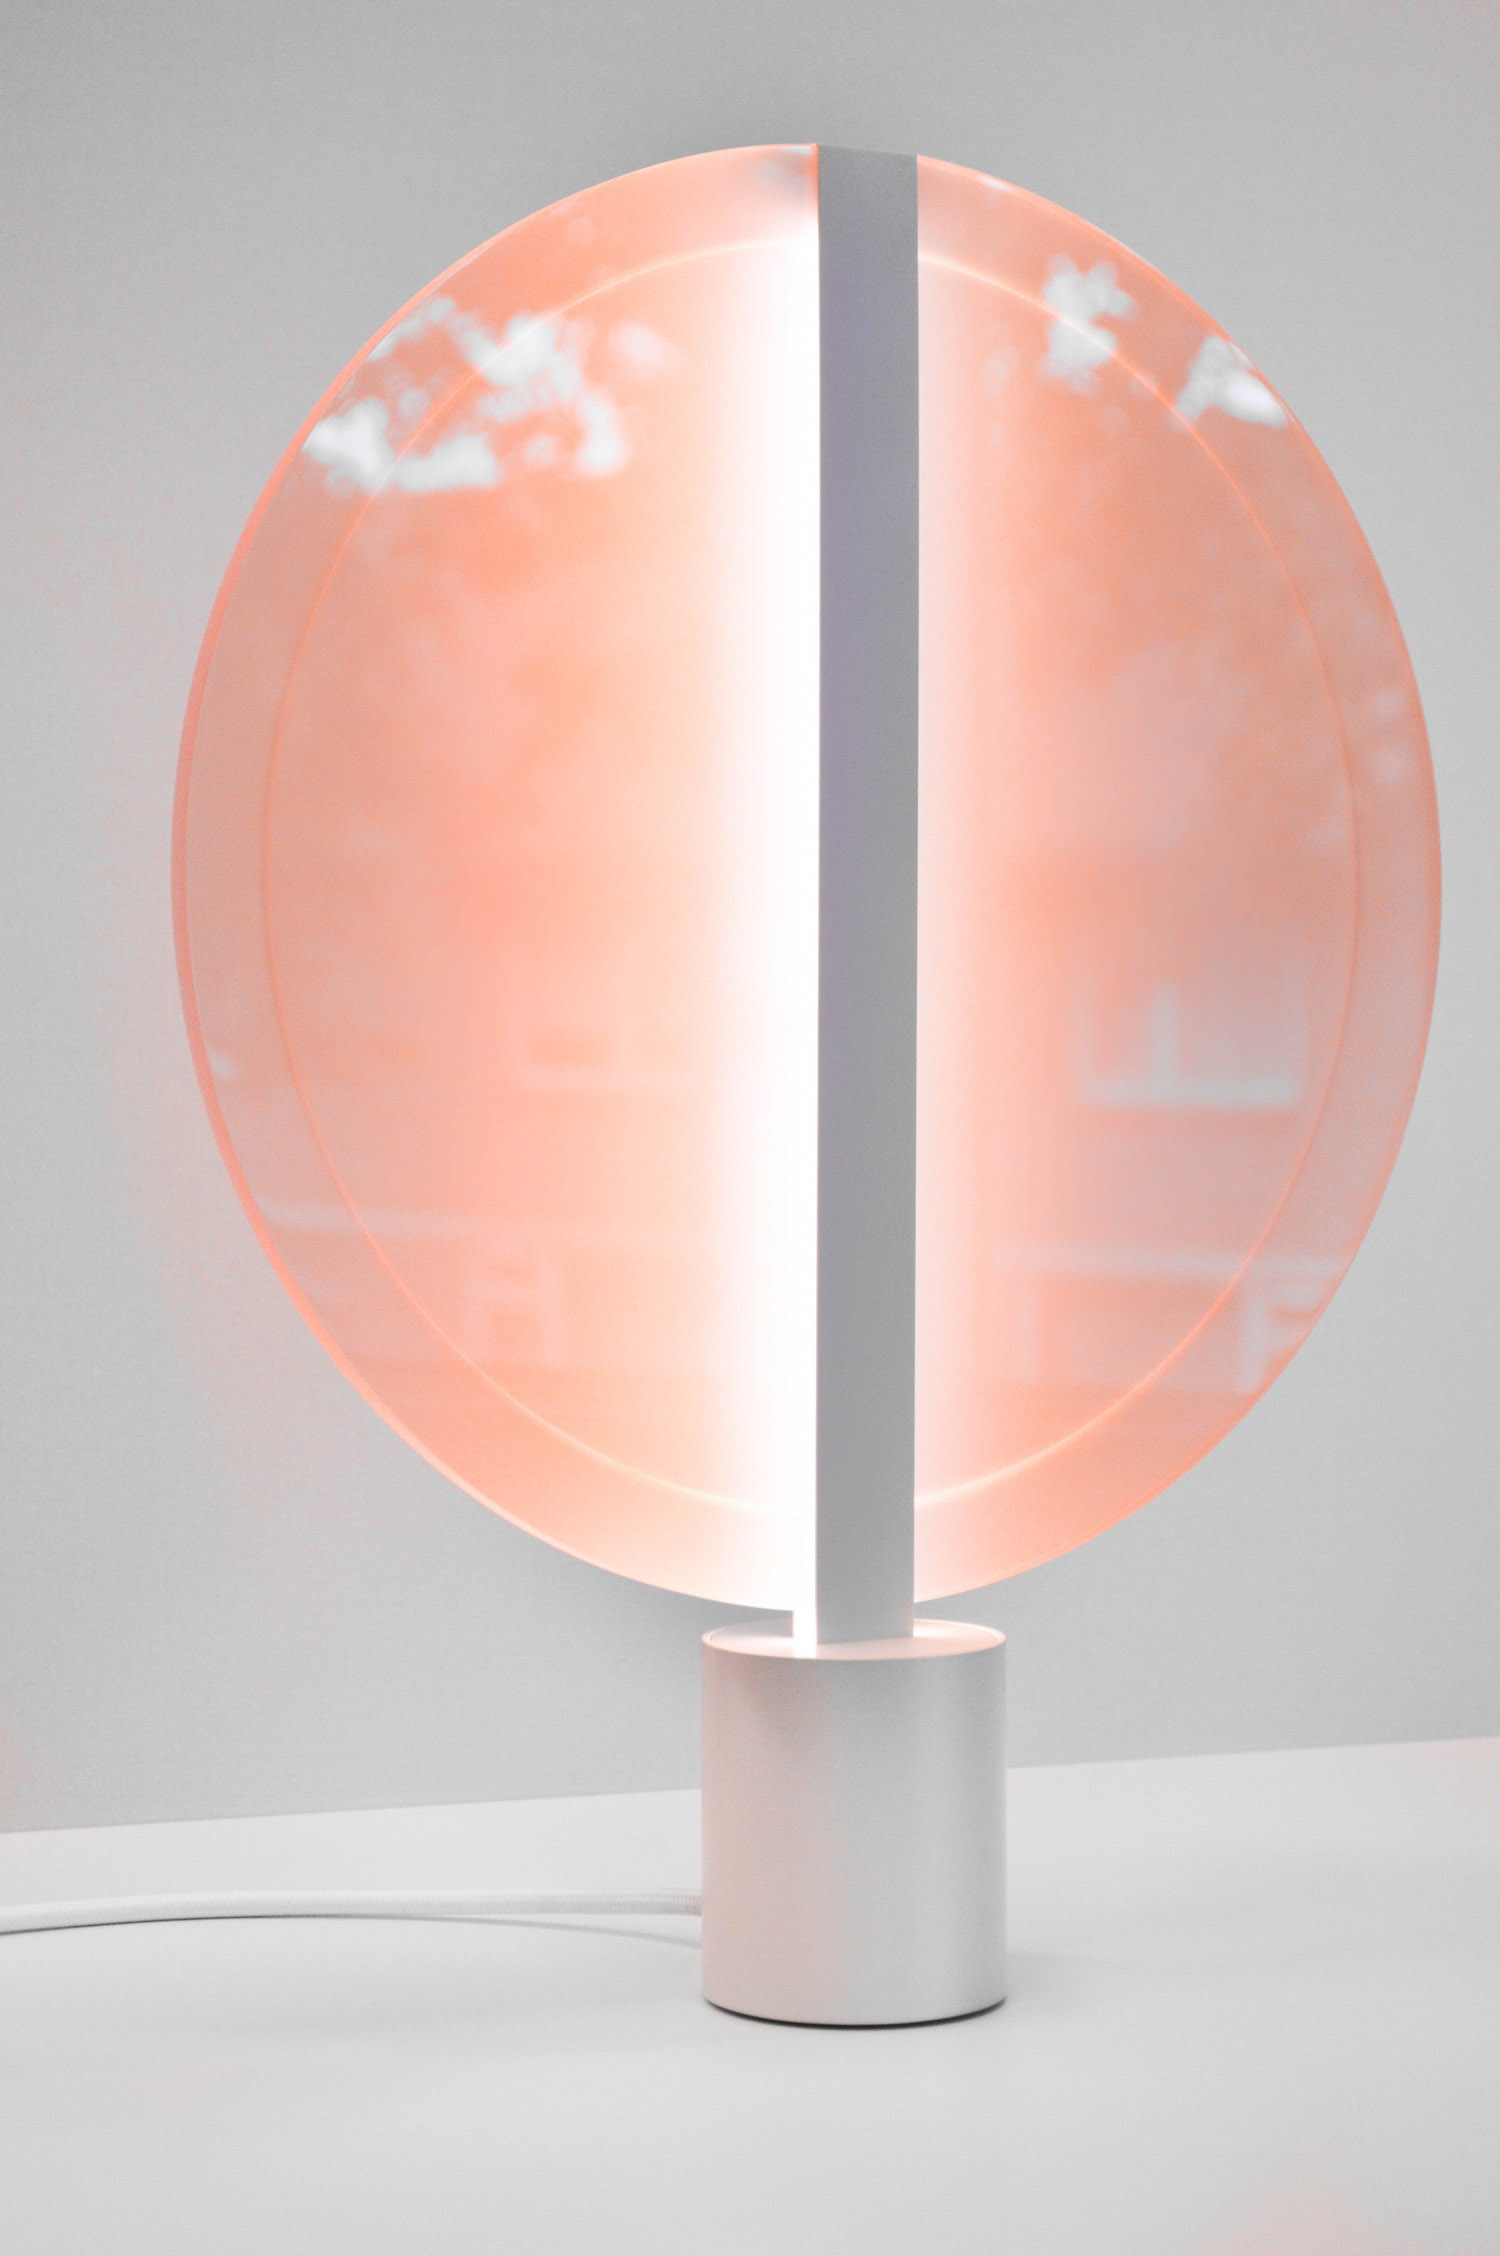 design_studio_fabian_zeijler-designs_lamps_sun_gazing_14